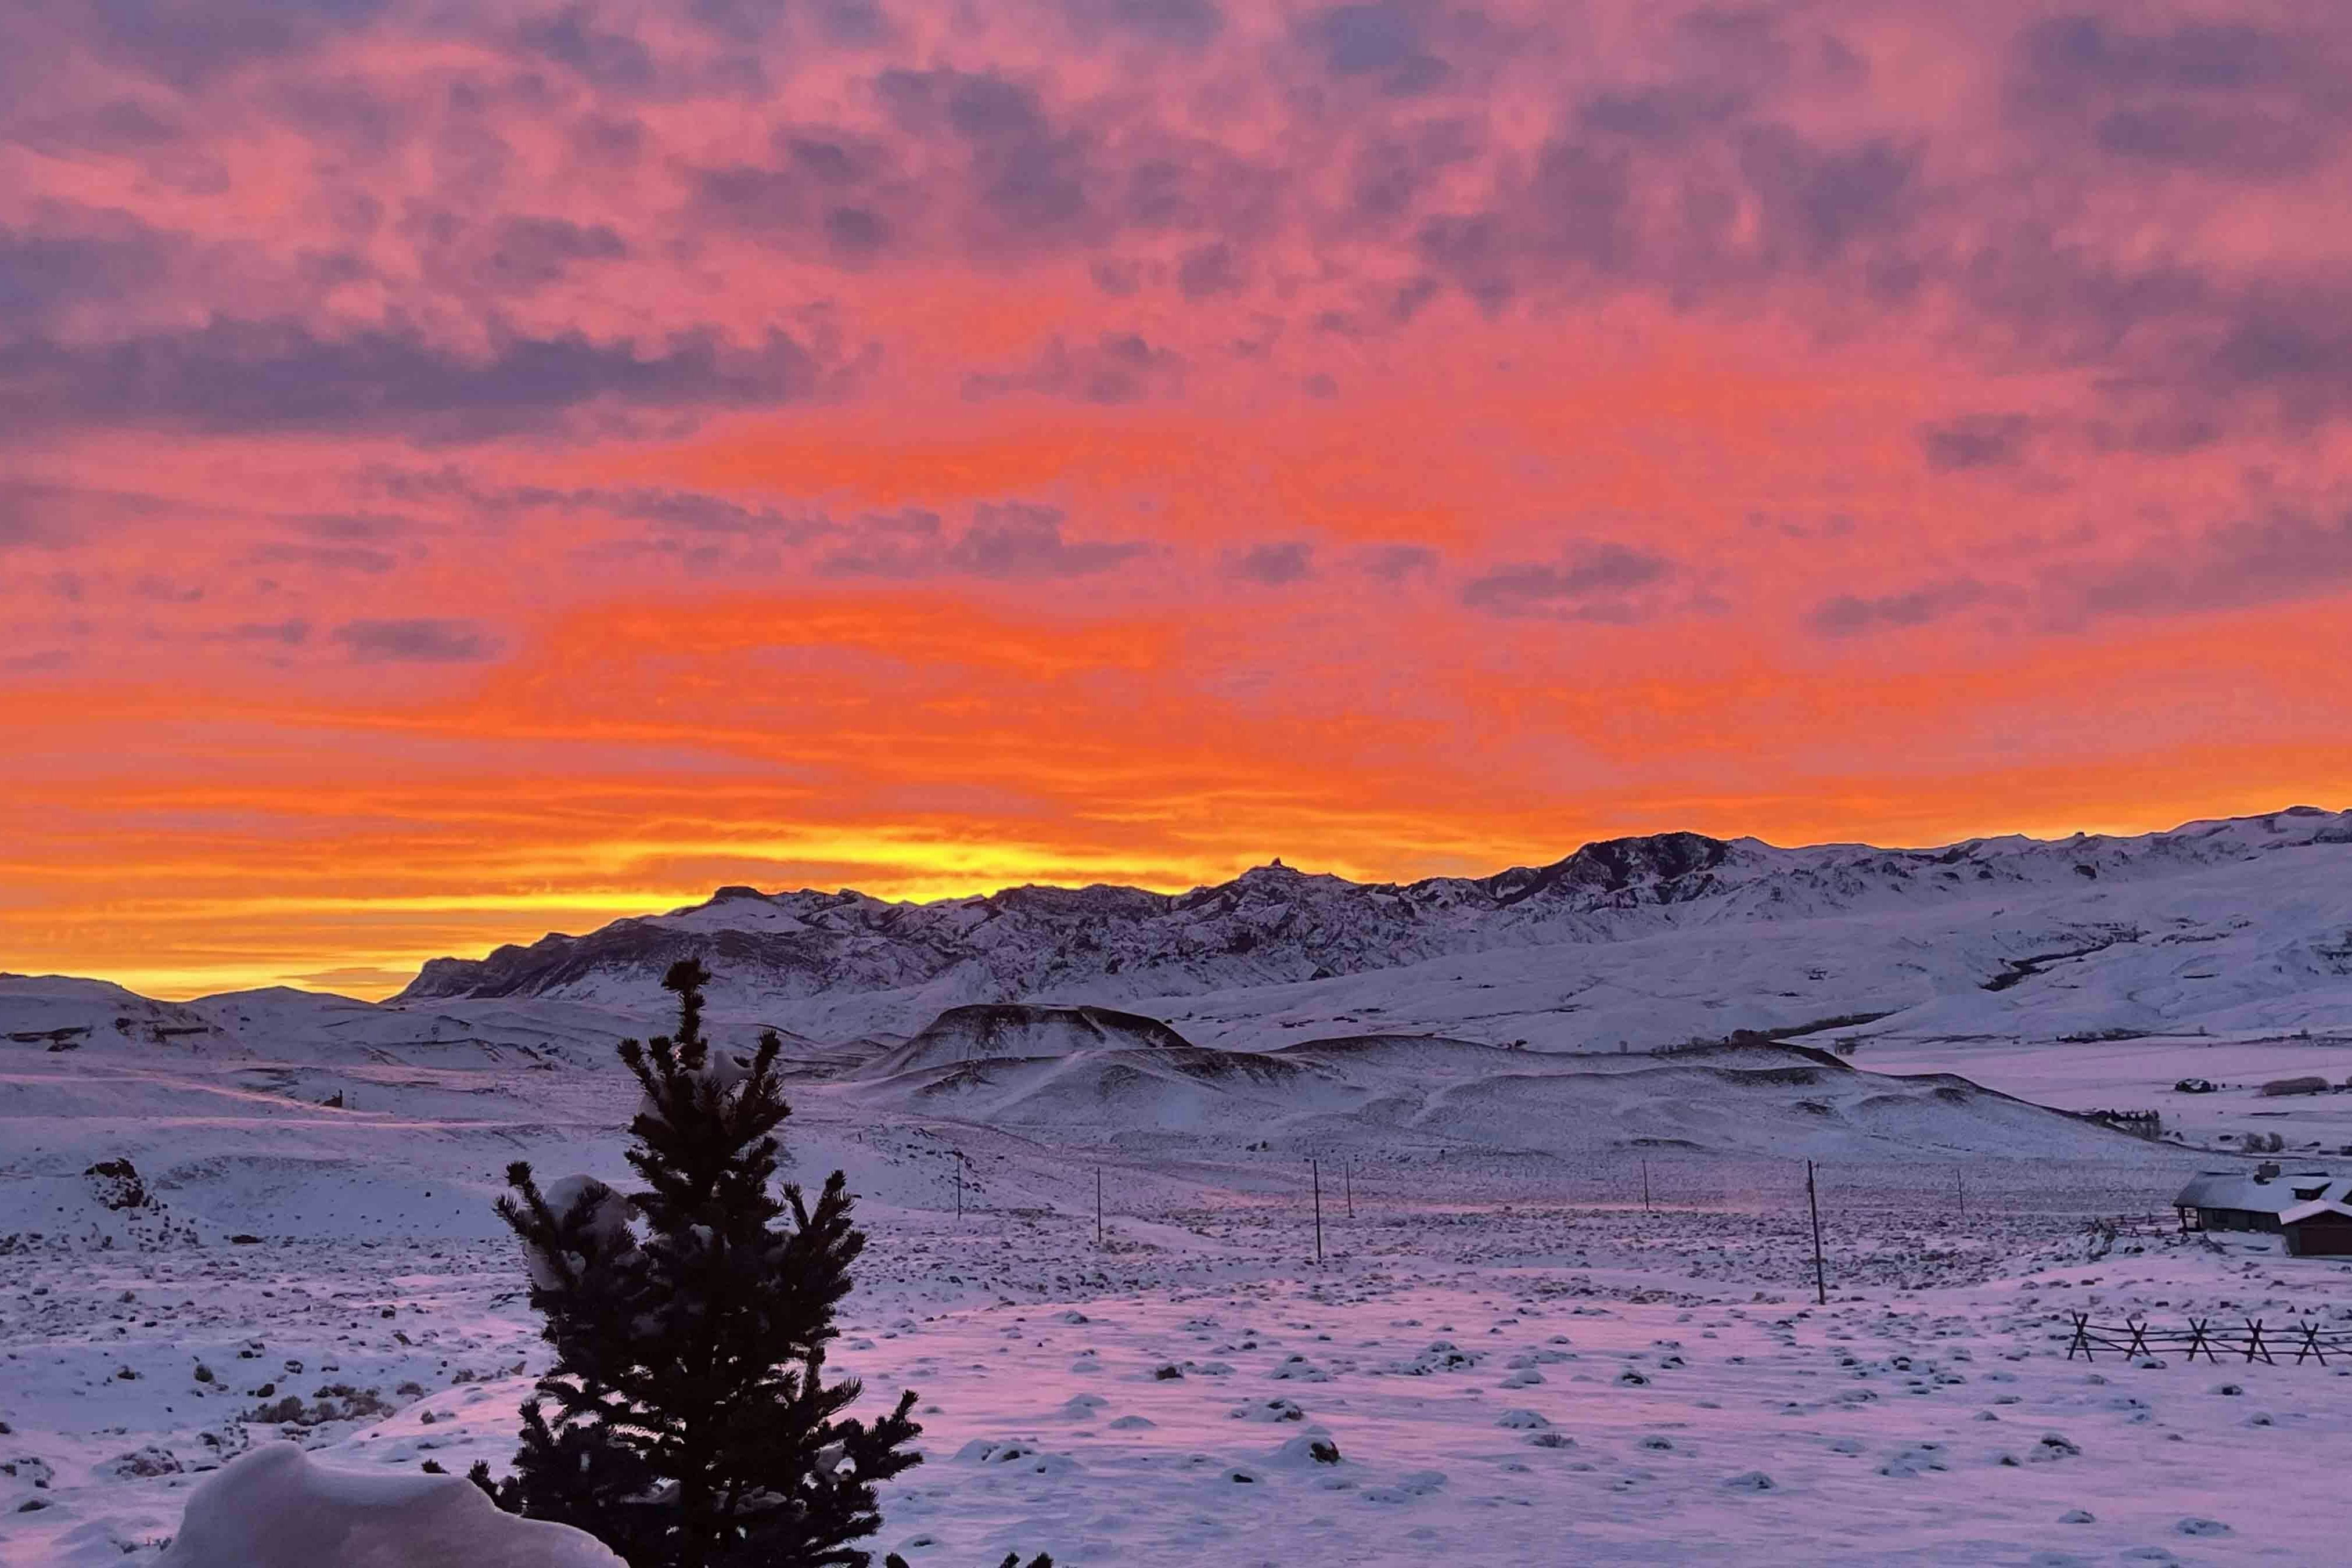 "Woke up to a warm pink glow from this beautiful sunrise in Wapiti, Wyoming."